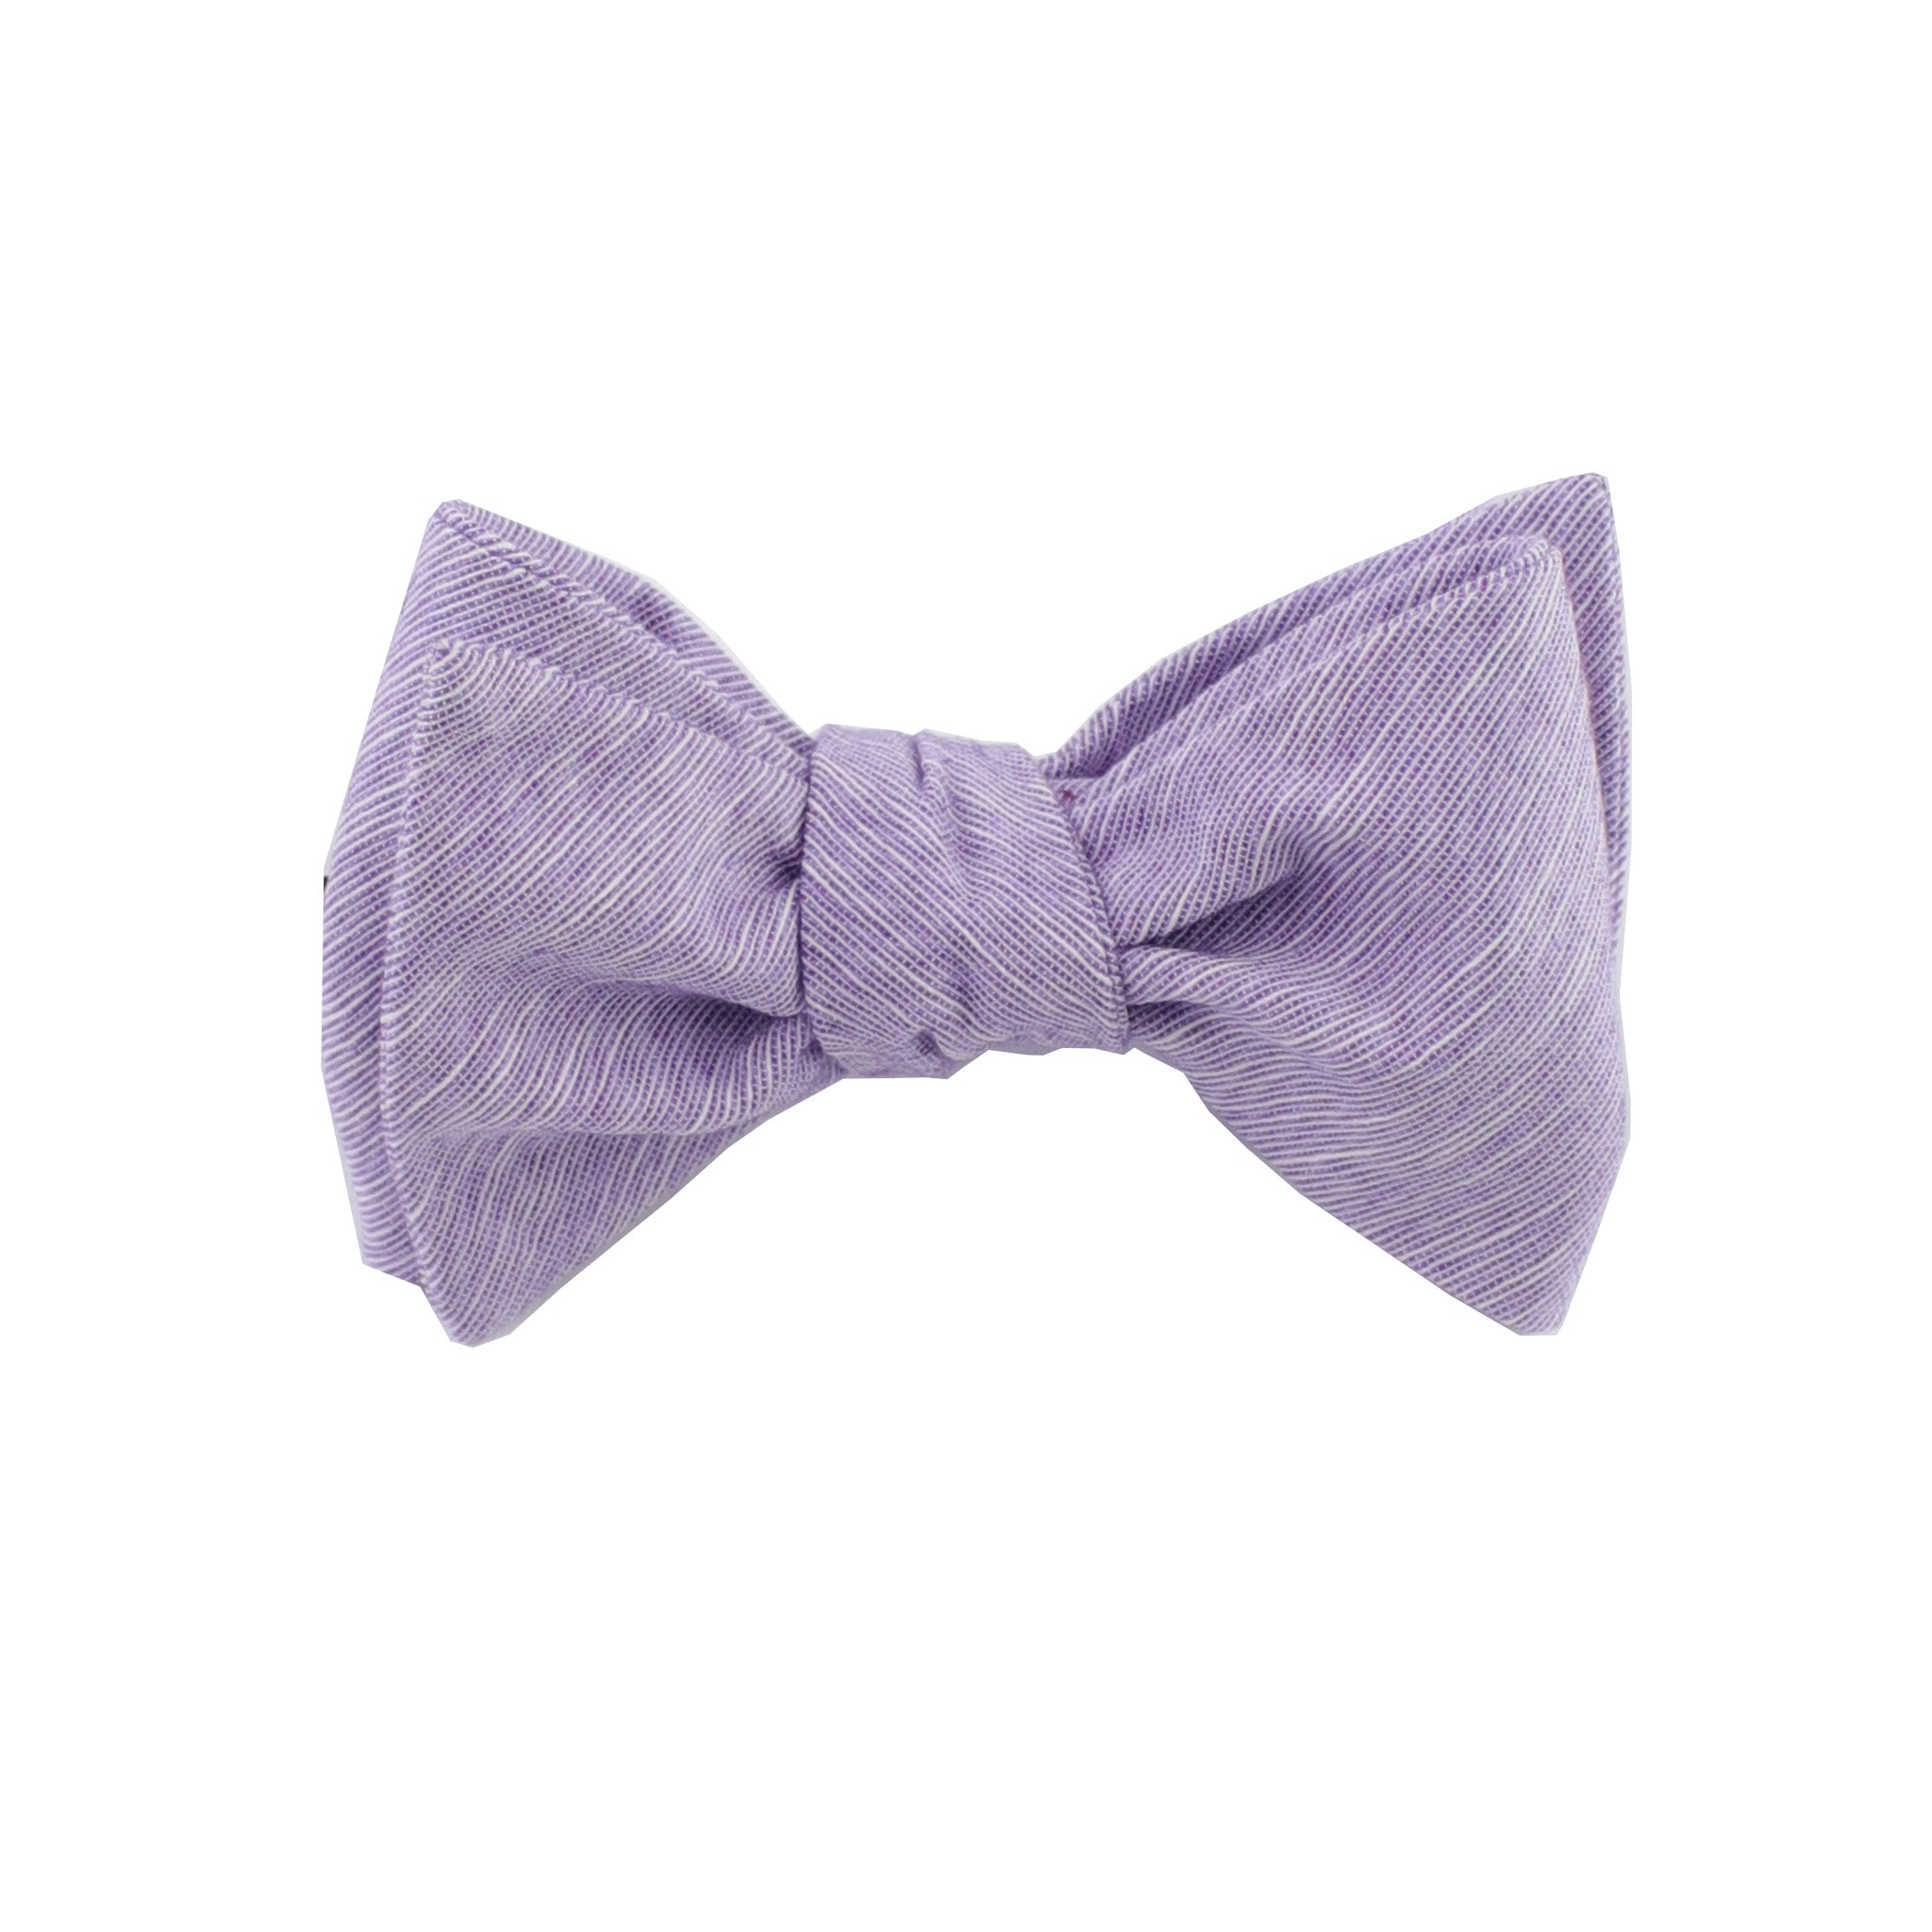 Light Purple Linen Self Tie Bow Tie from DIBI